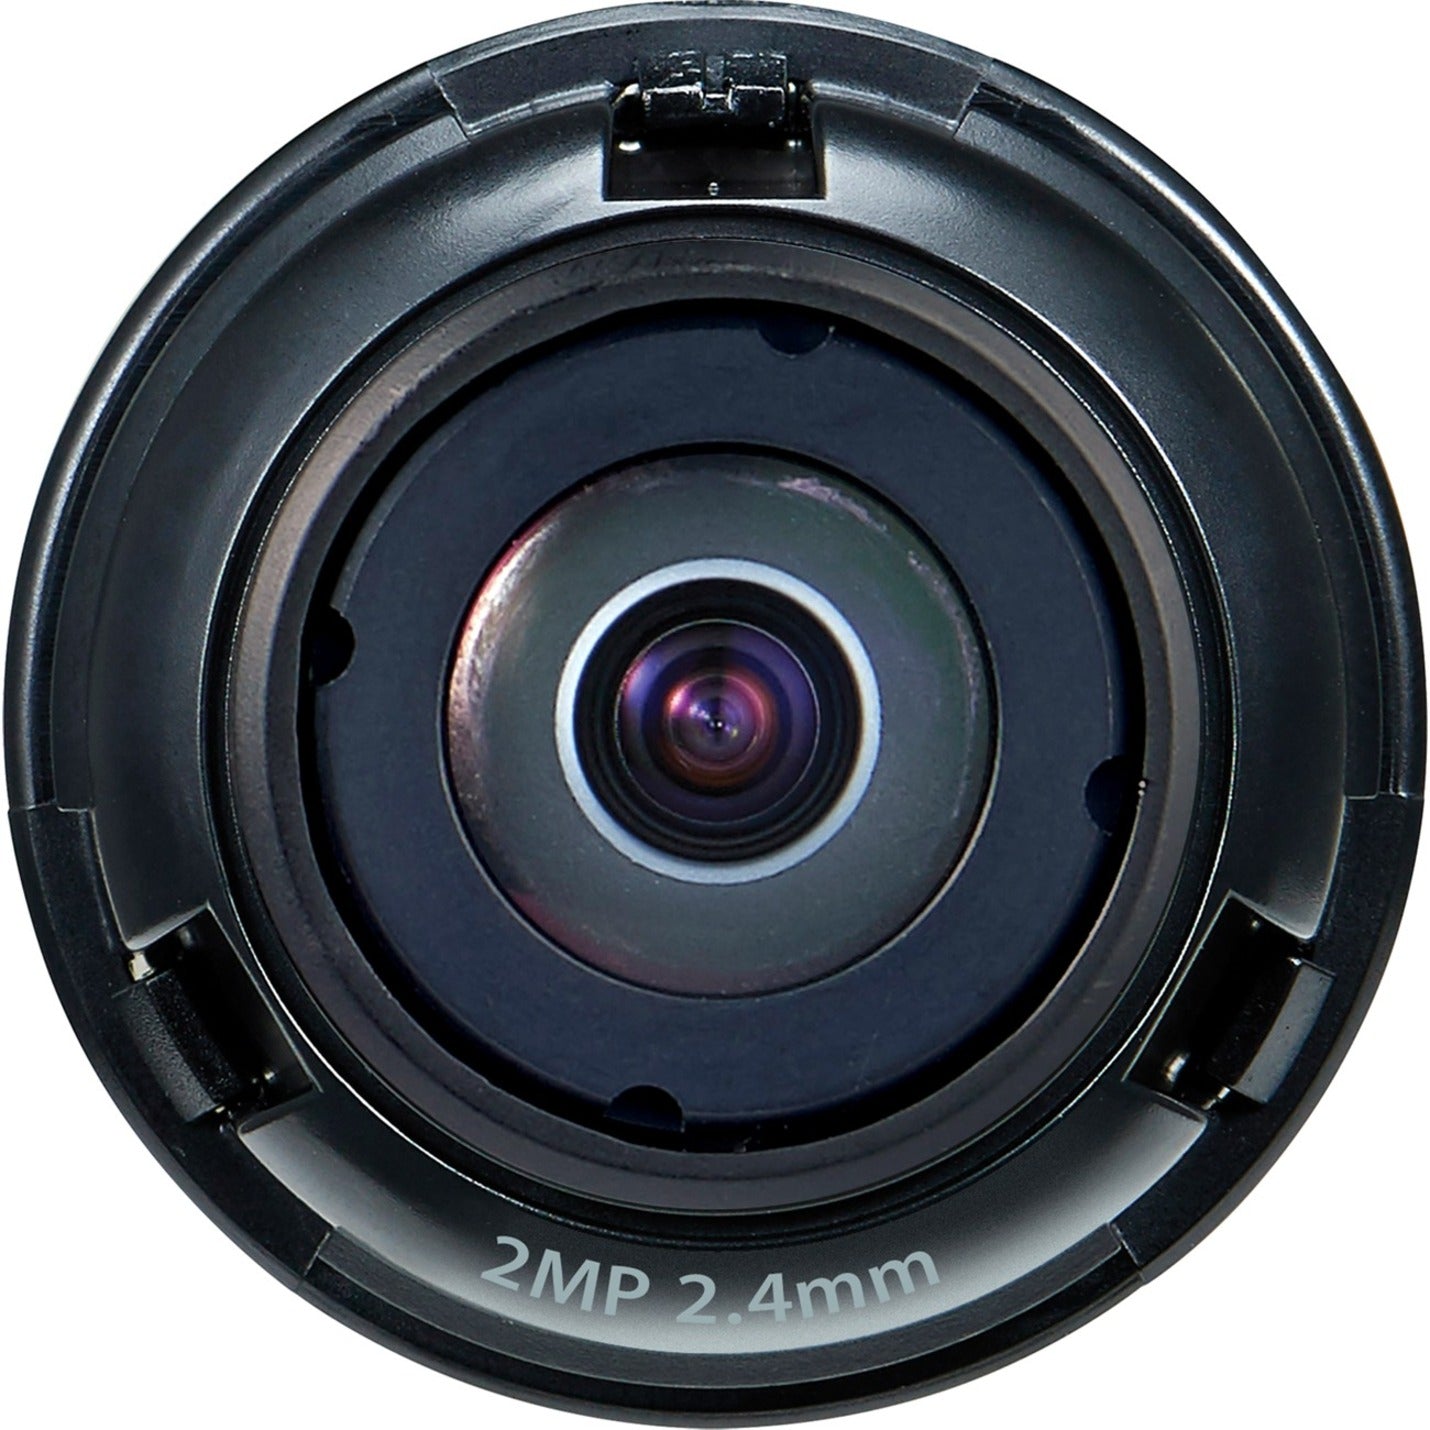 Wisenet SLA-2M2402D PNM-7002VD Lens Module, 2.40mm f/2 Fixed Lens for Surveillance Camera